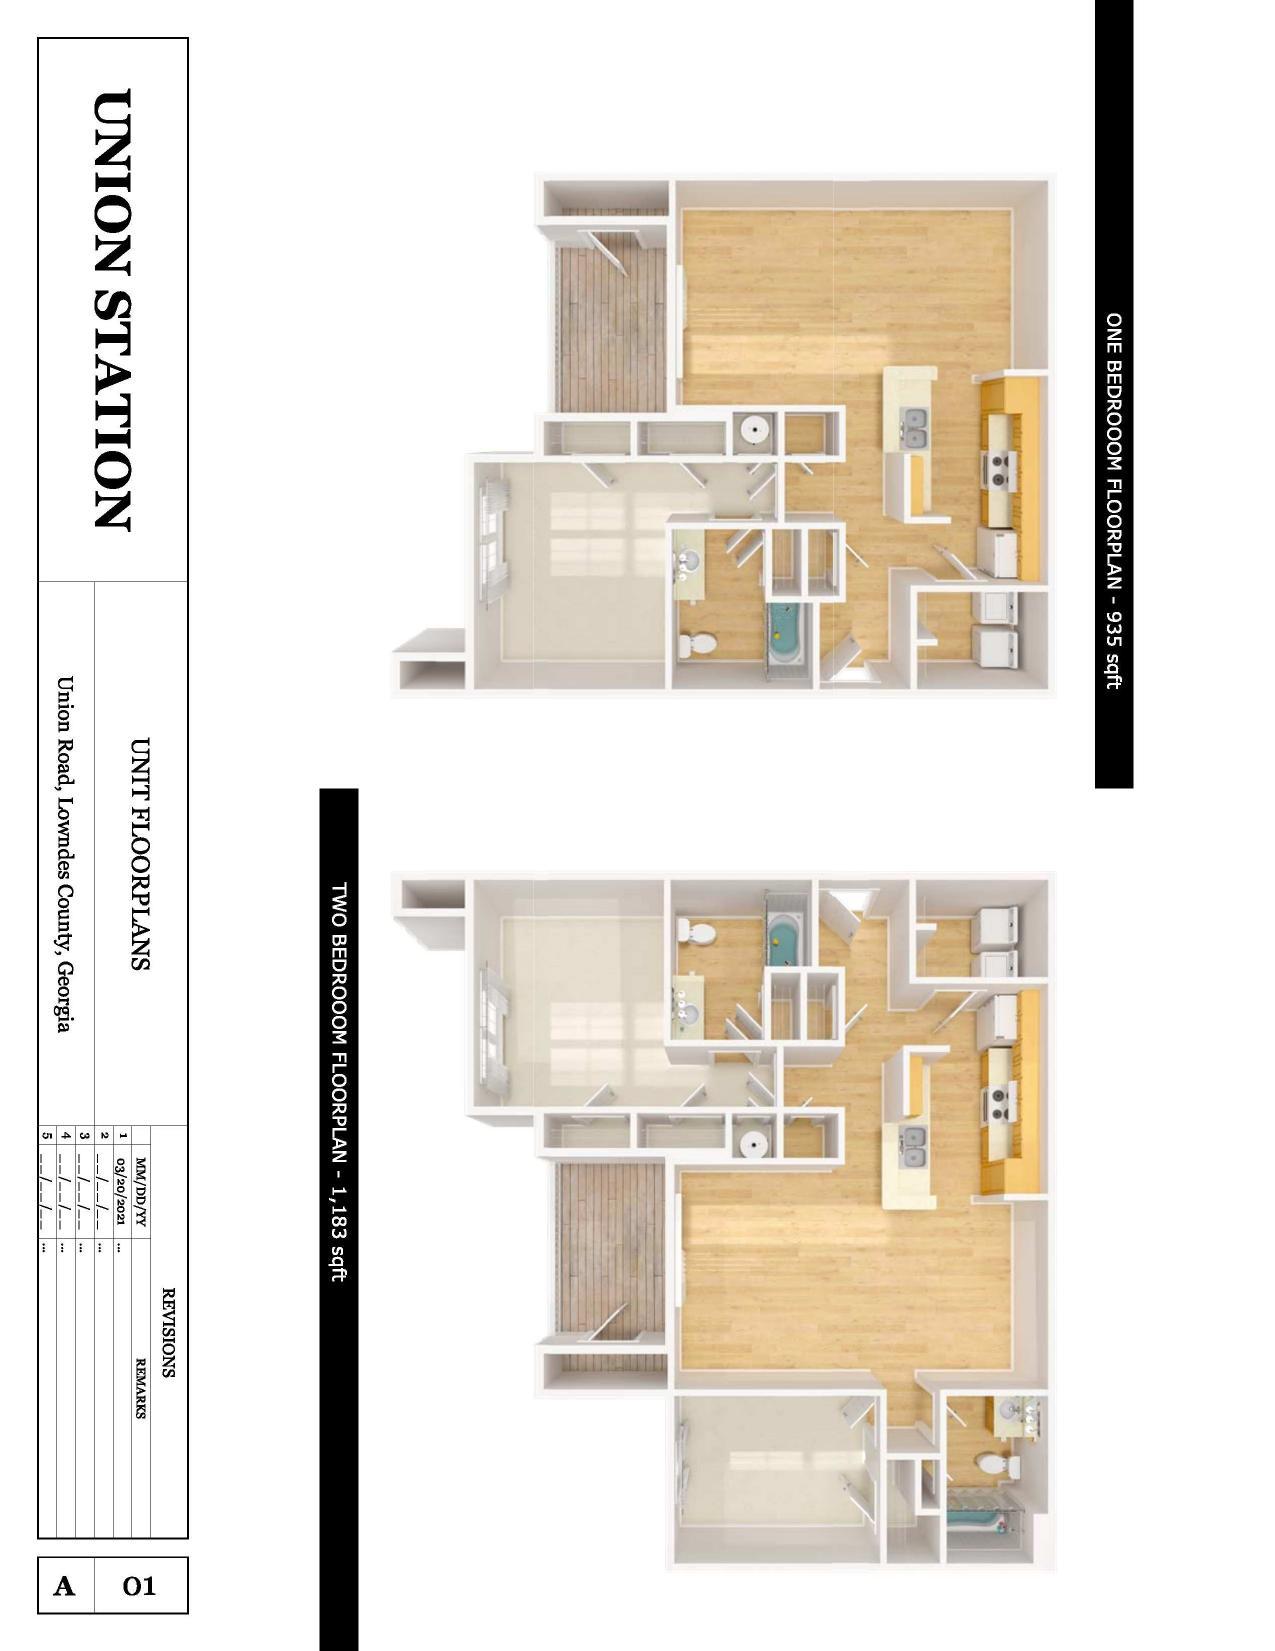 Unit Floorplans, two bedroom